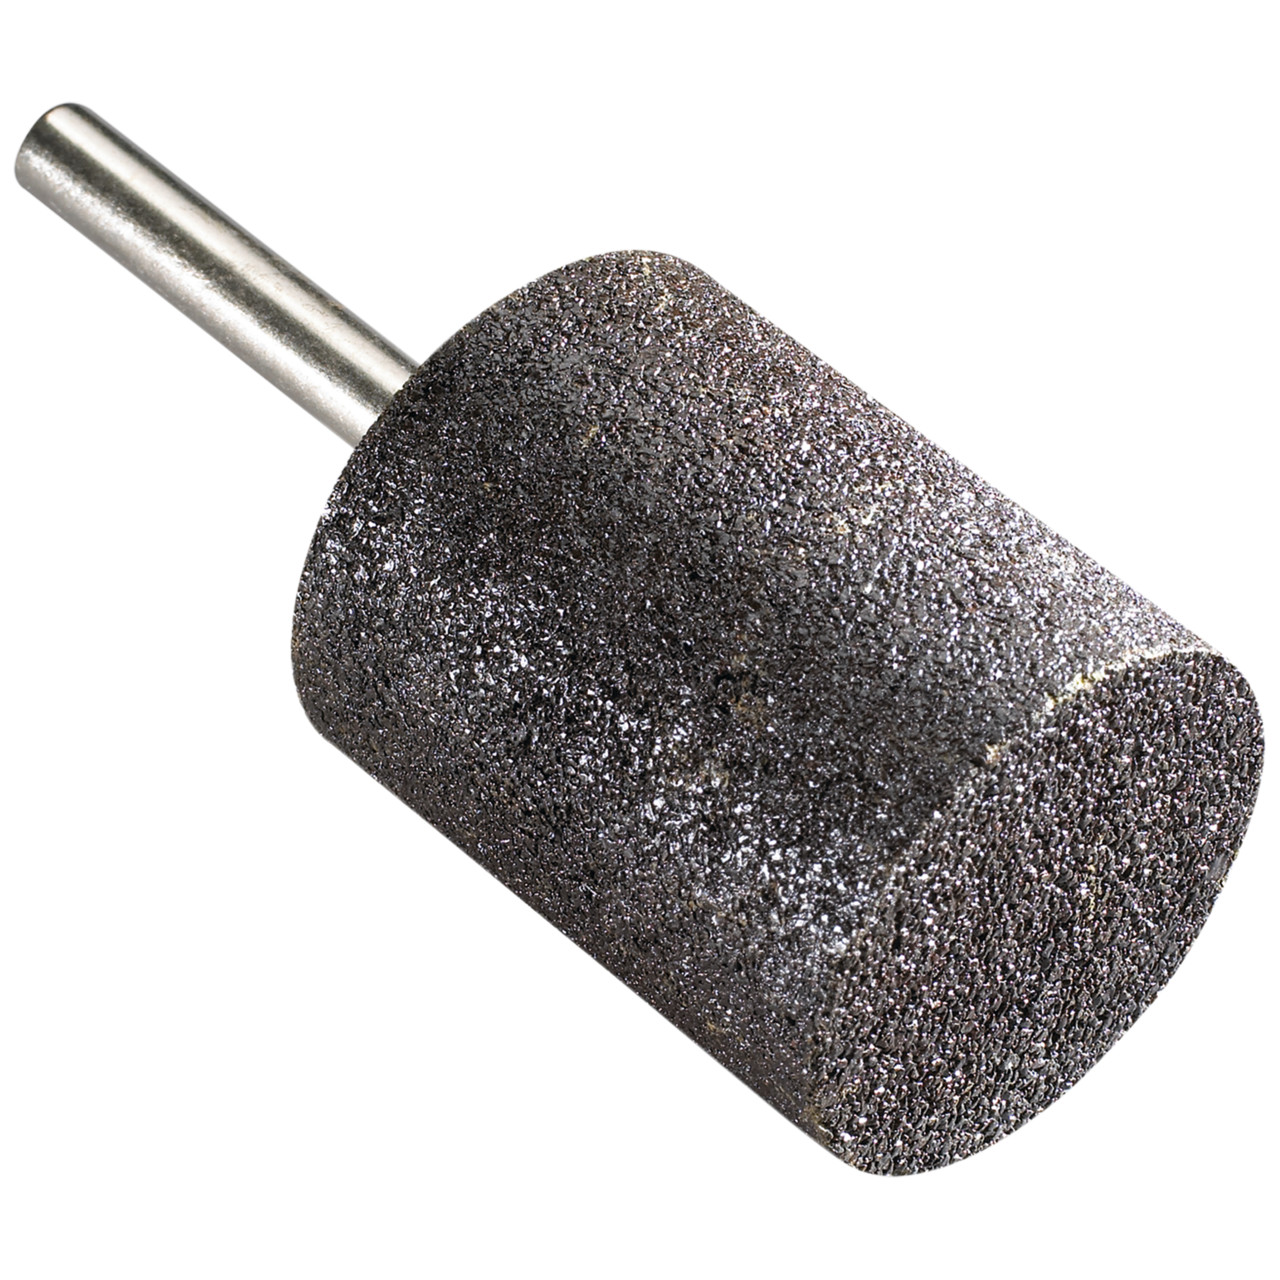 Tyrolit Punti montati in resina DxT-SxL 50x25-6x40 Per ghisa, forma: 52ZY - cilindro (punto montato), Art. 2284